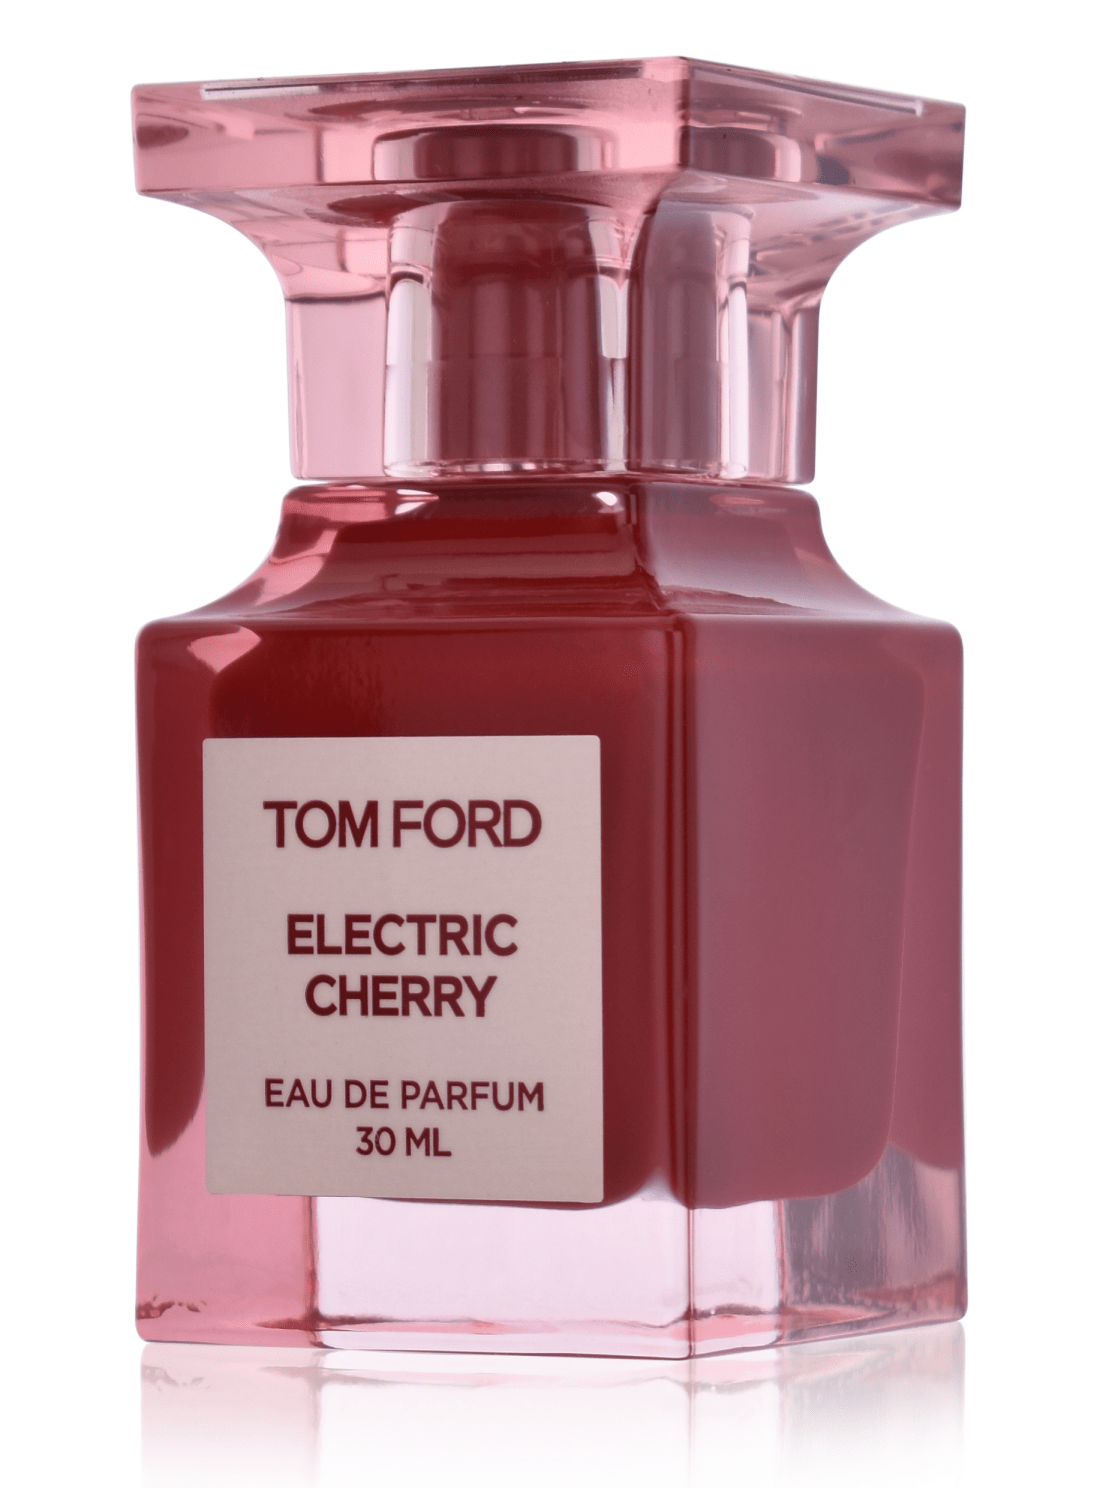 Tom Ford Electric Cherry 30 ml Eau de Parfum    